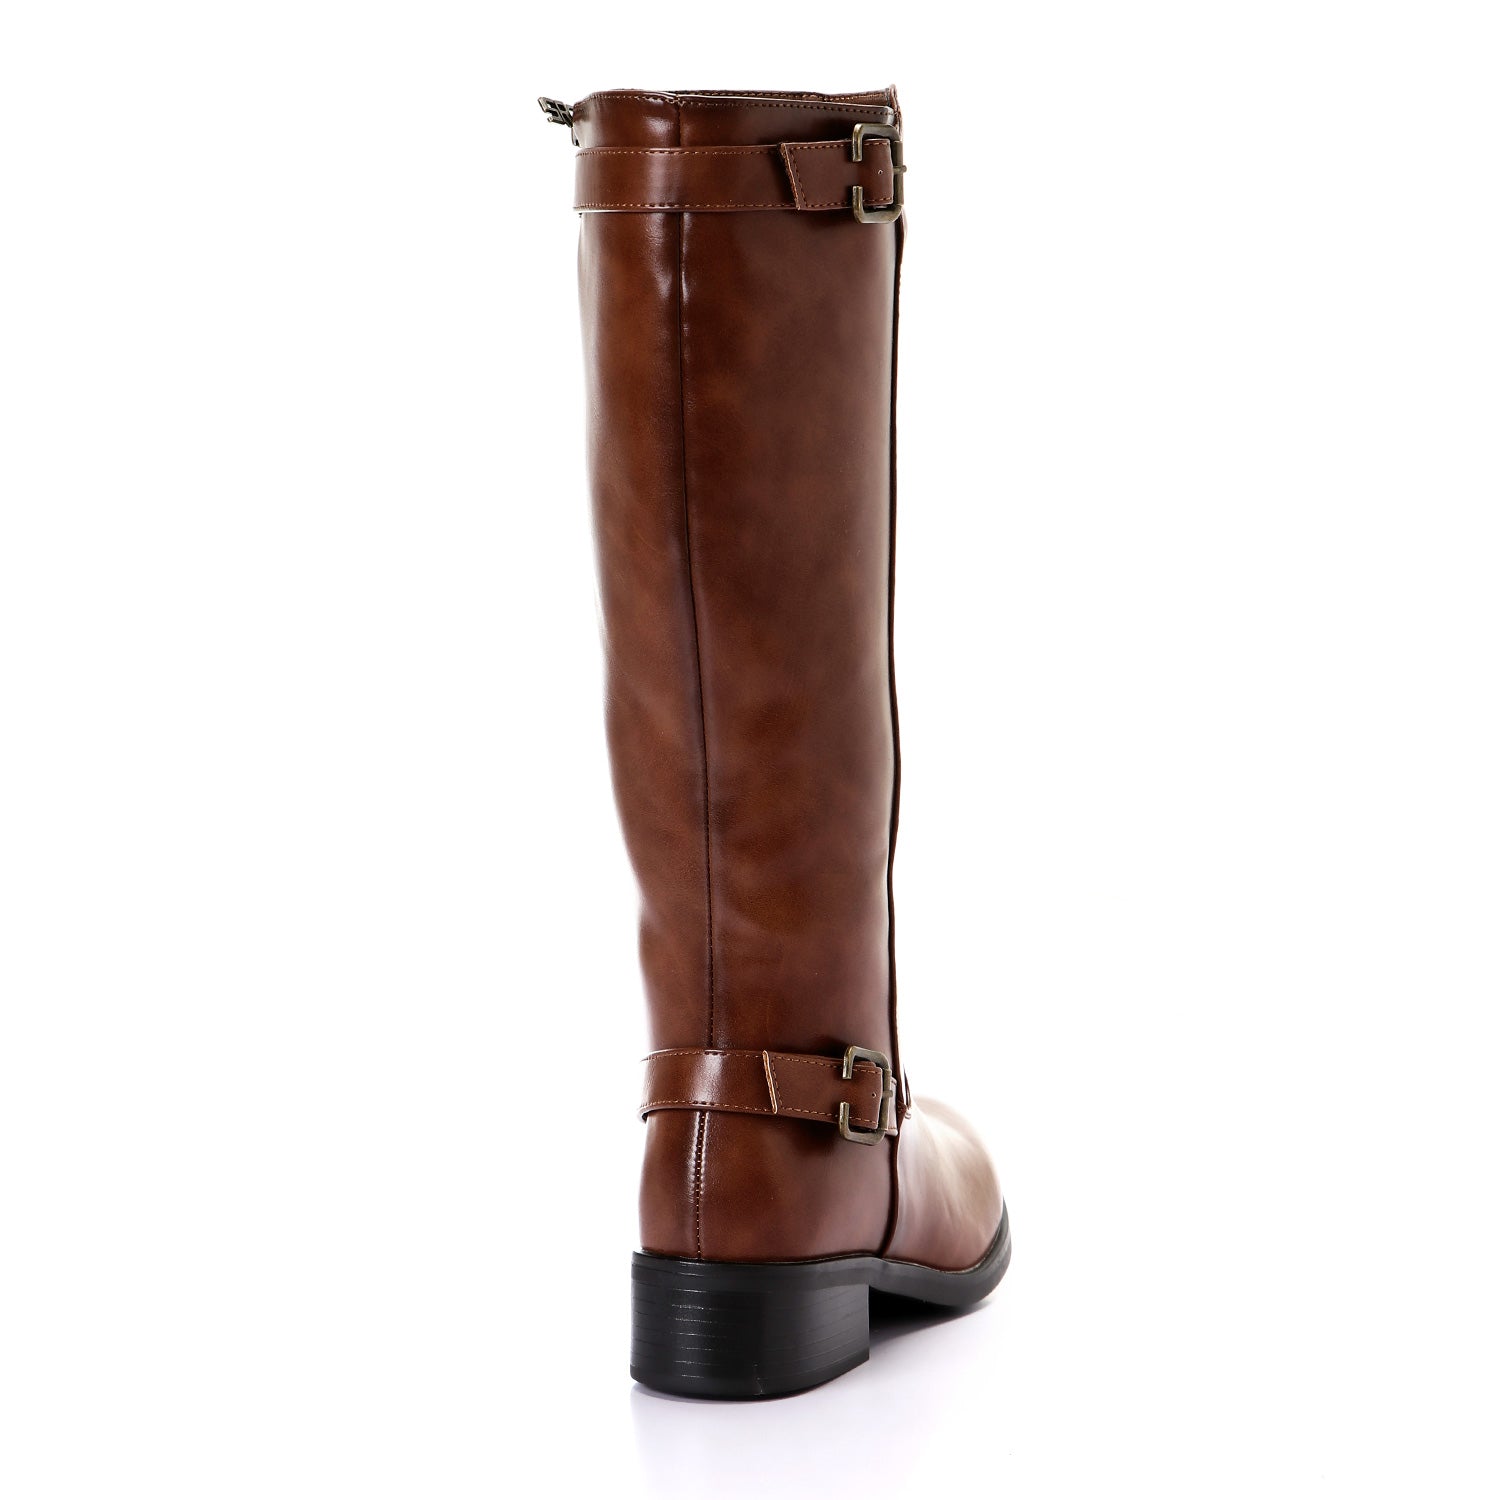 Shoeroom Leather Knee Boot For Women 1889